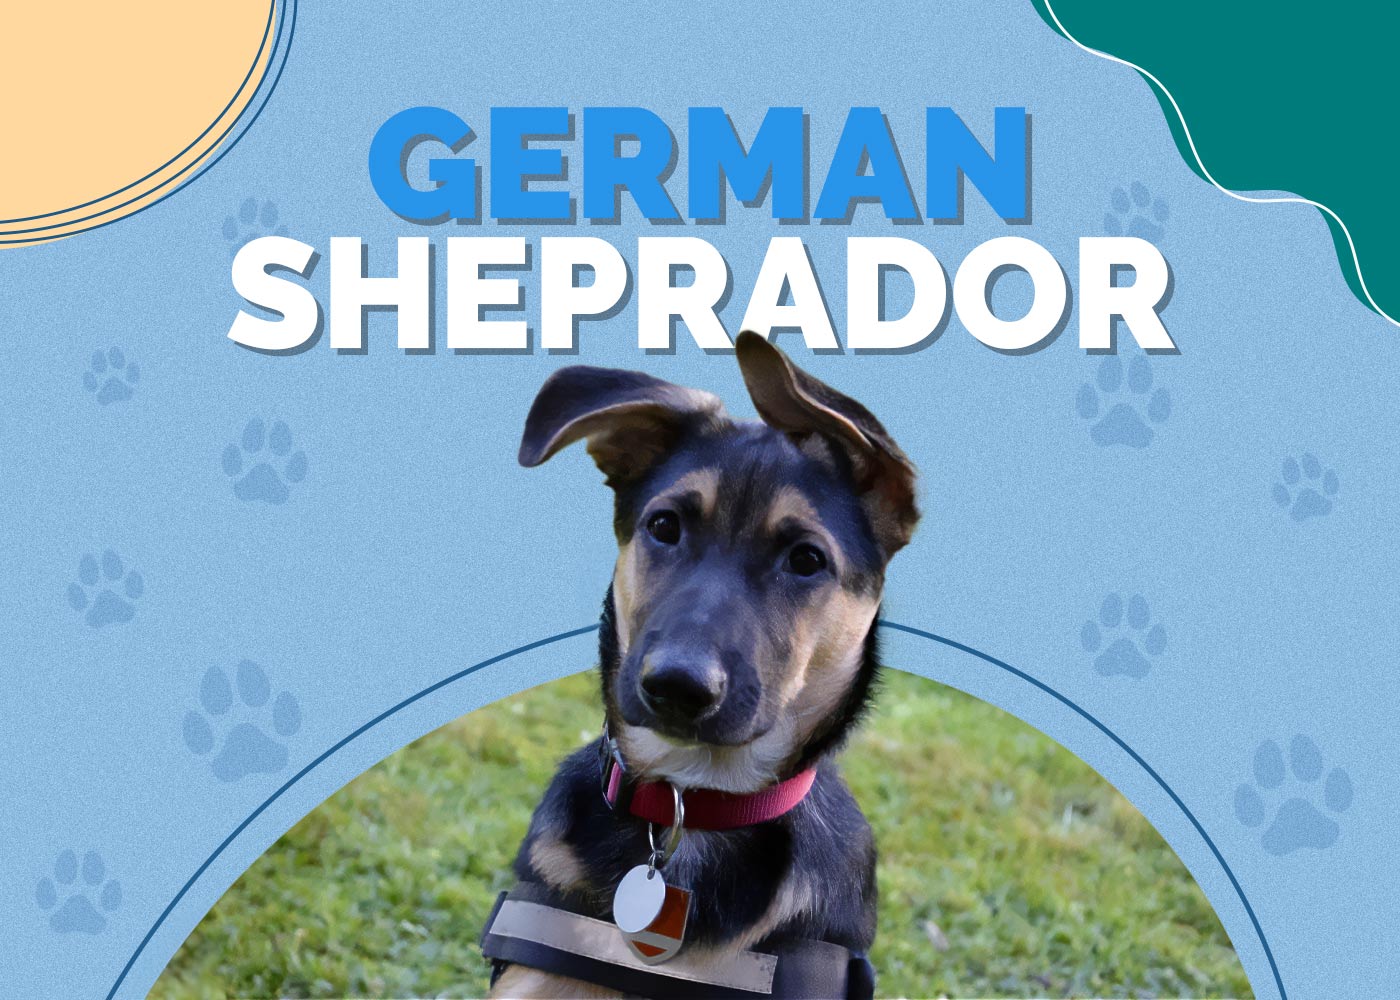 German Sheprador (Labrador & German Shepherd Mix)